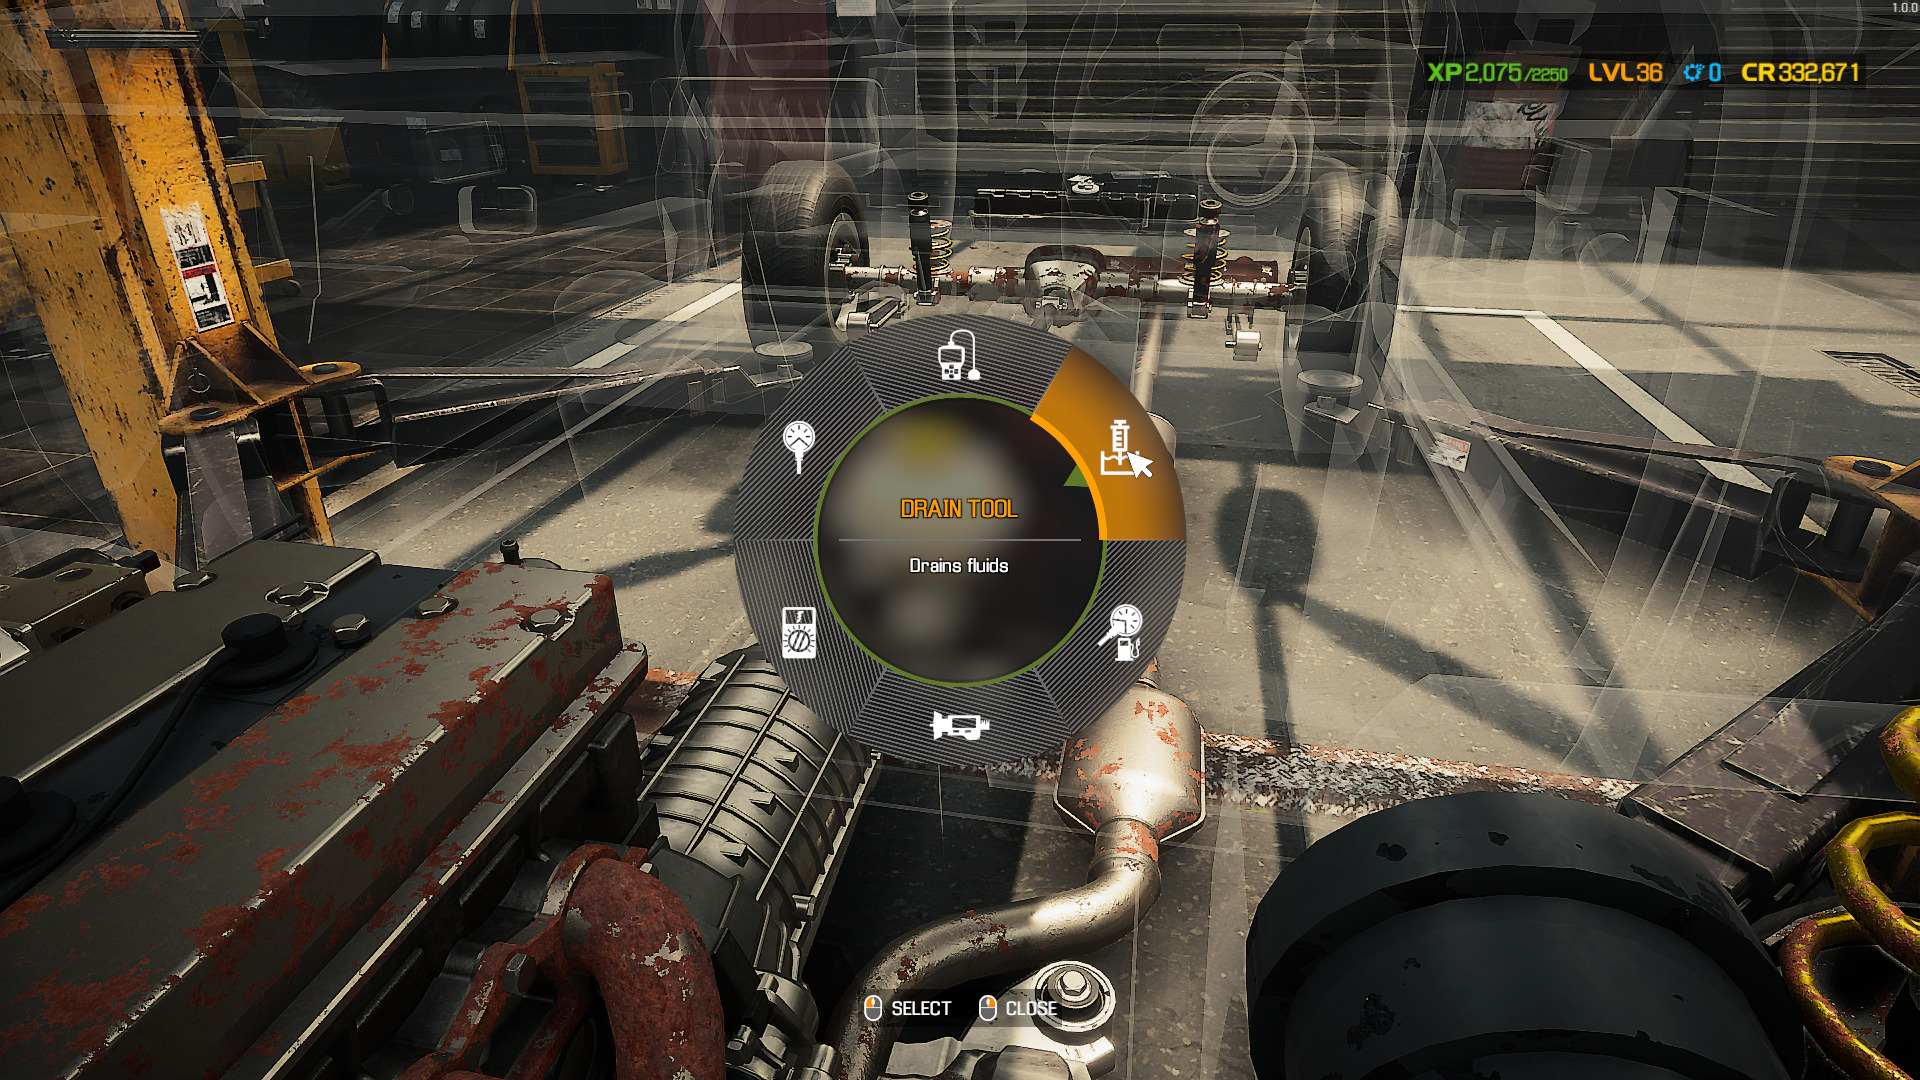 A screenshot showing the Drain Tool in the Pie Menu in Car Mechanic Simulator